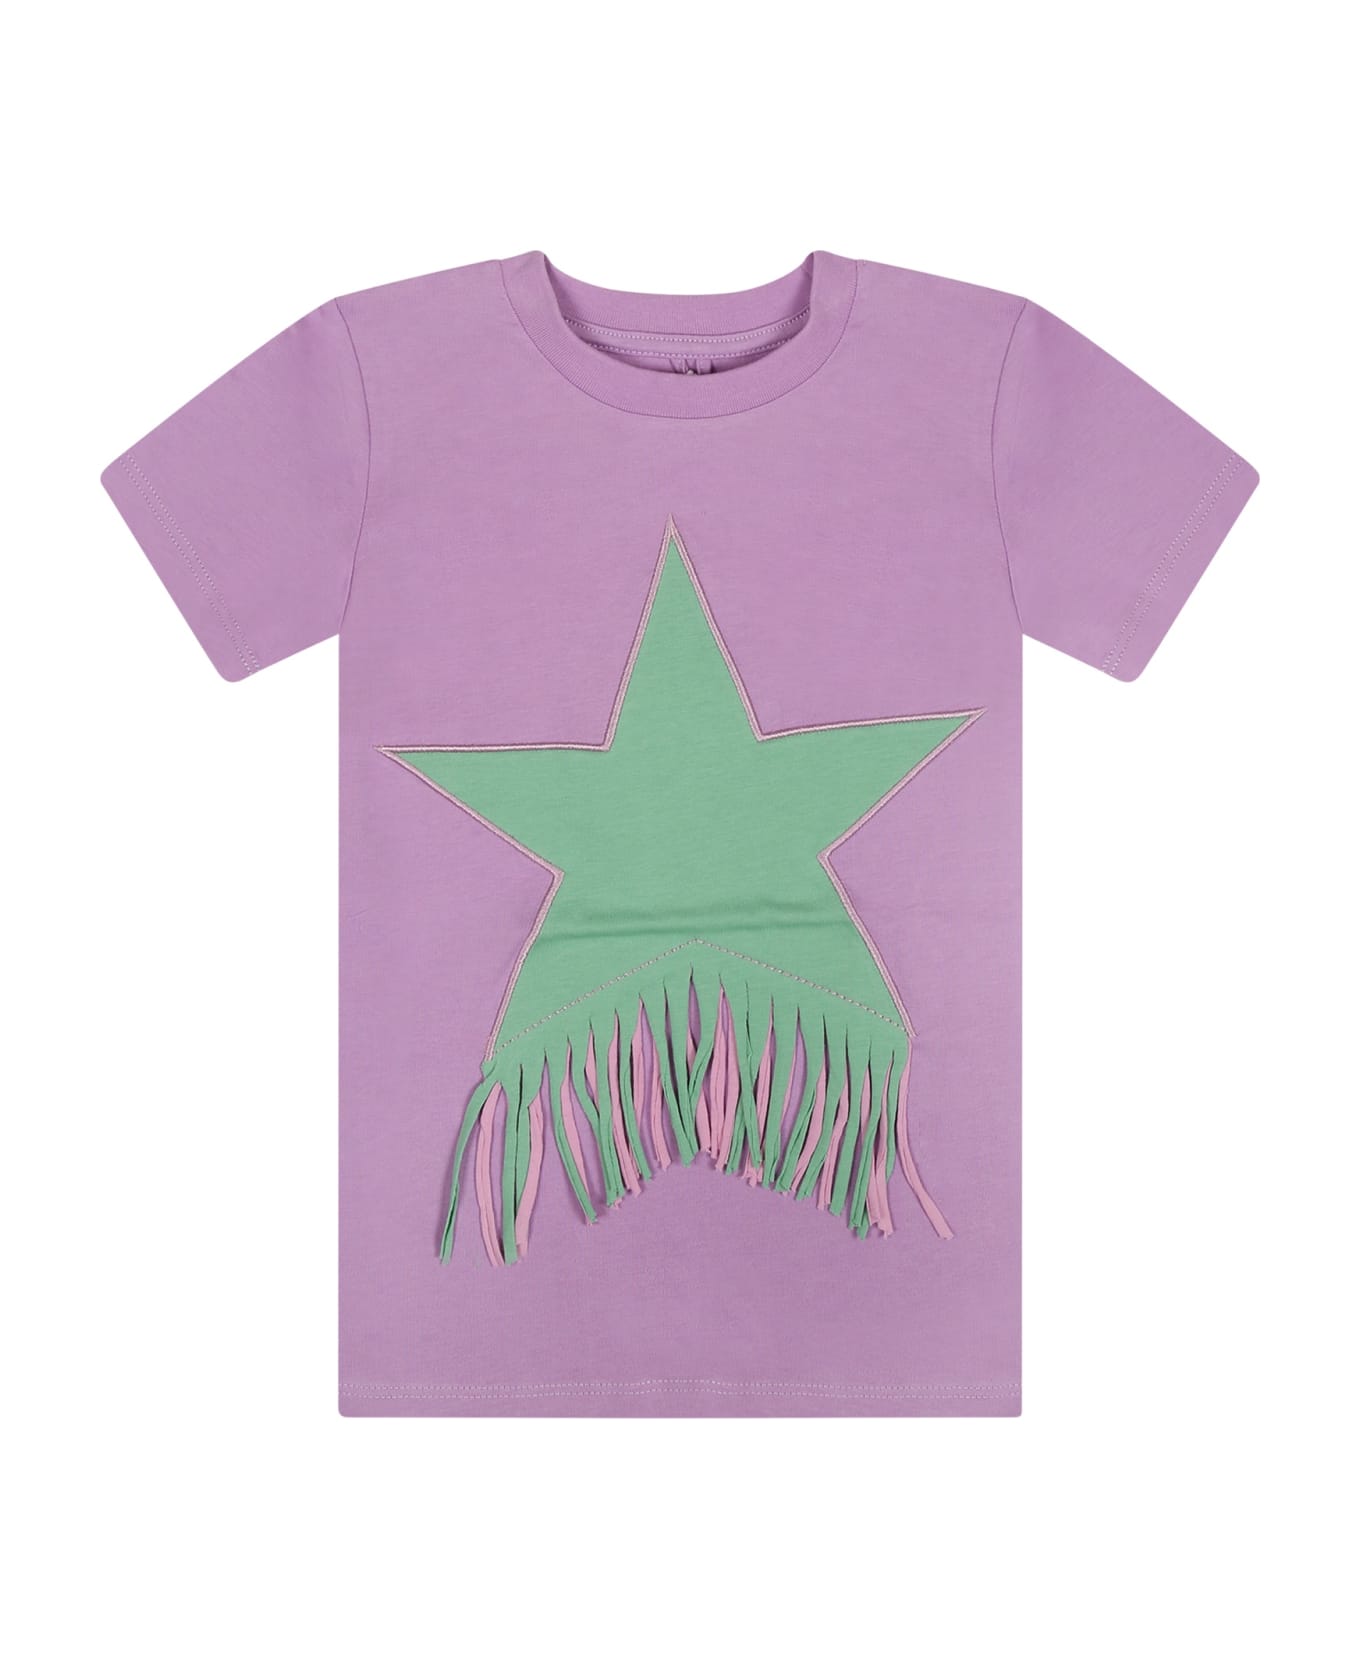 Stella McCartney Kids Purple Dress For Baby Girl With Star - Violet